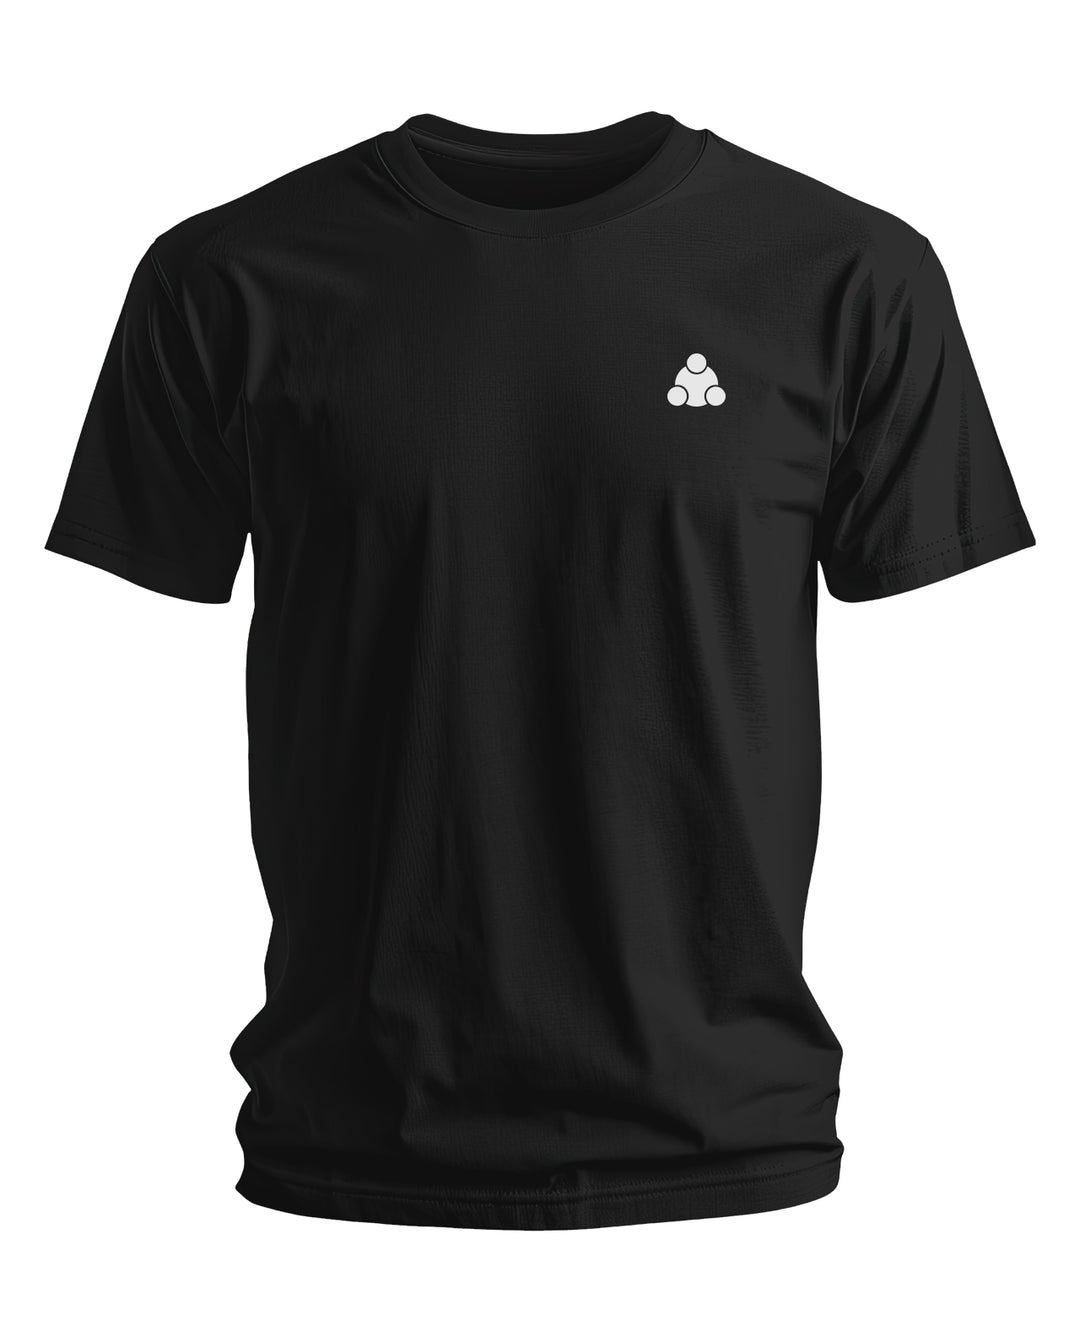 Trinizen Original Supima Cotton T-shirt - Black